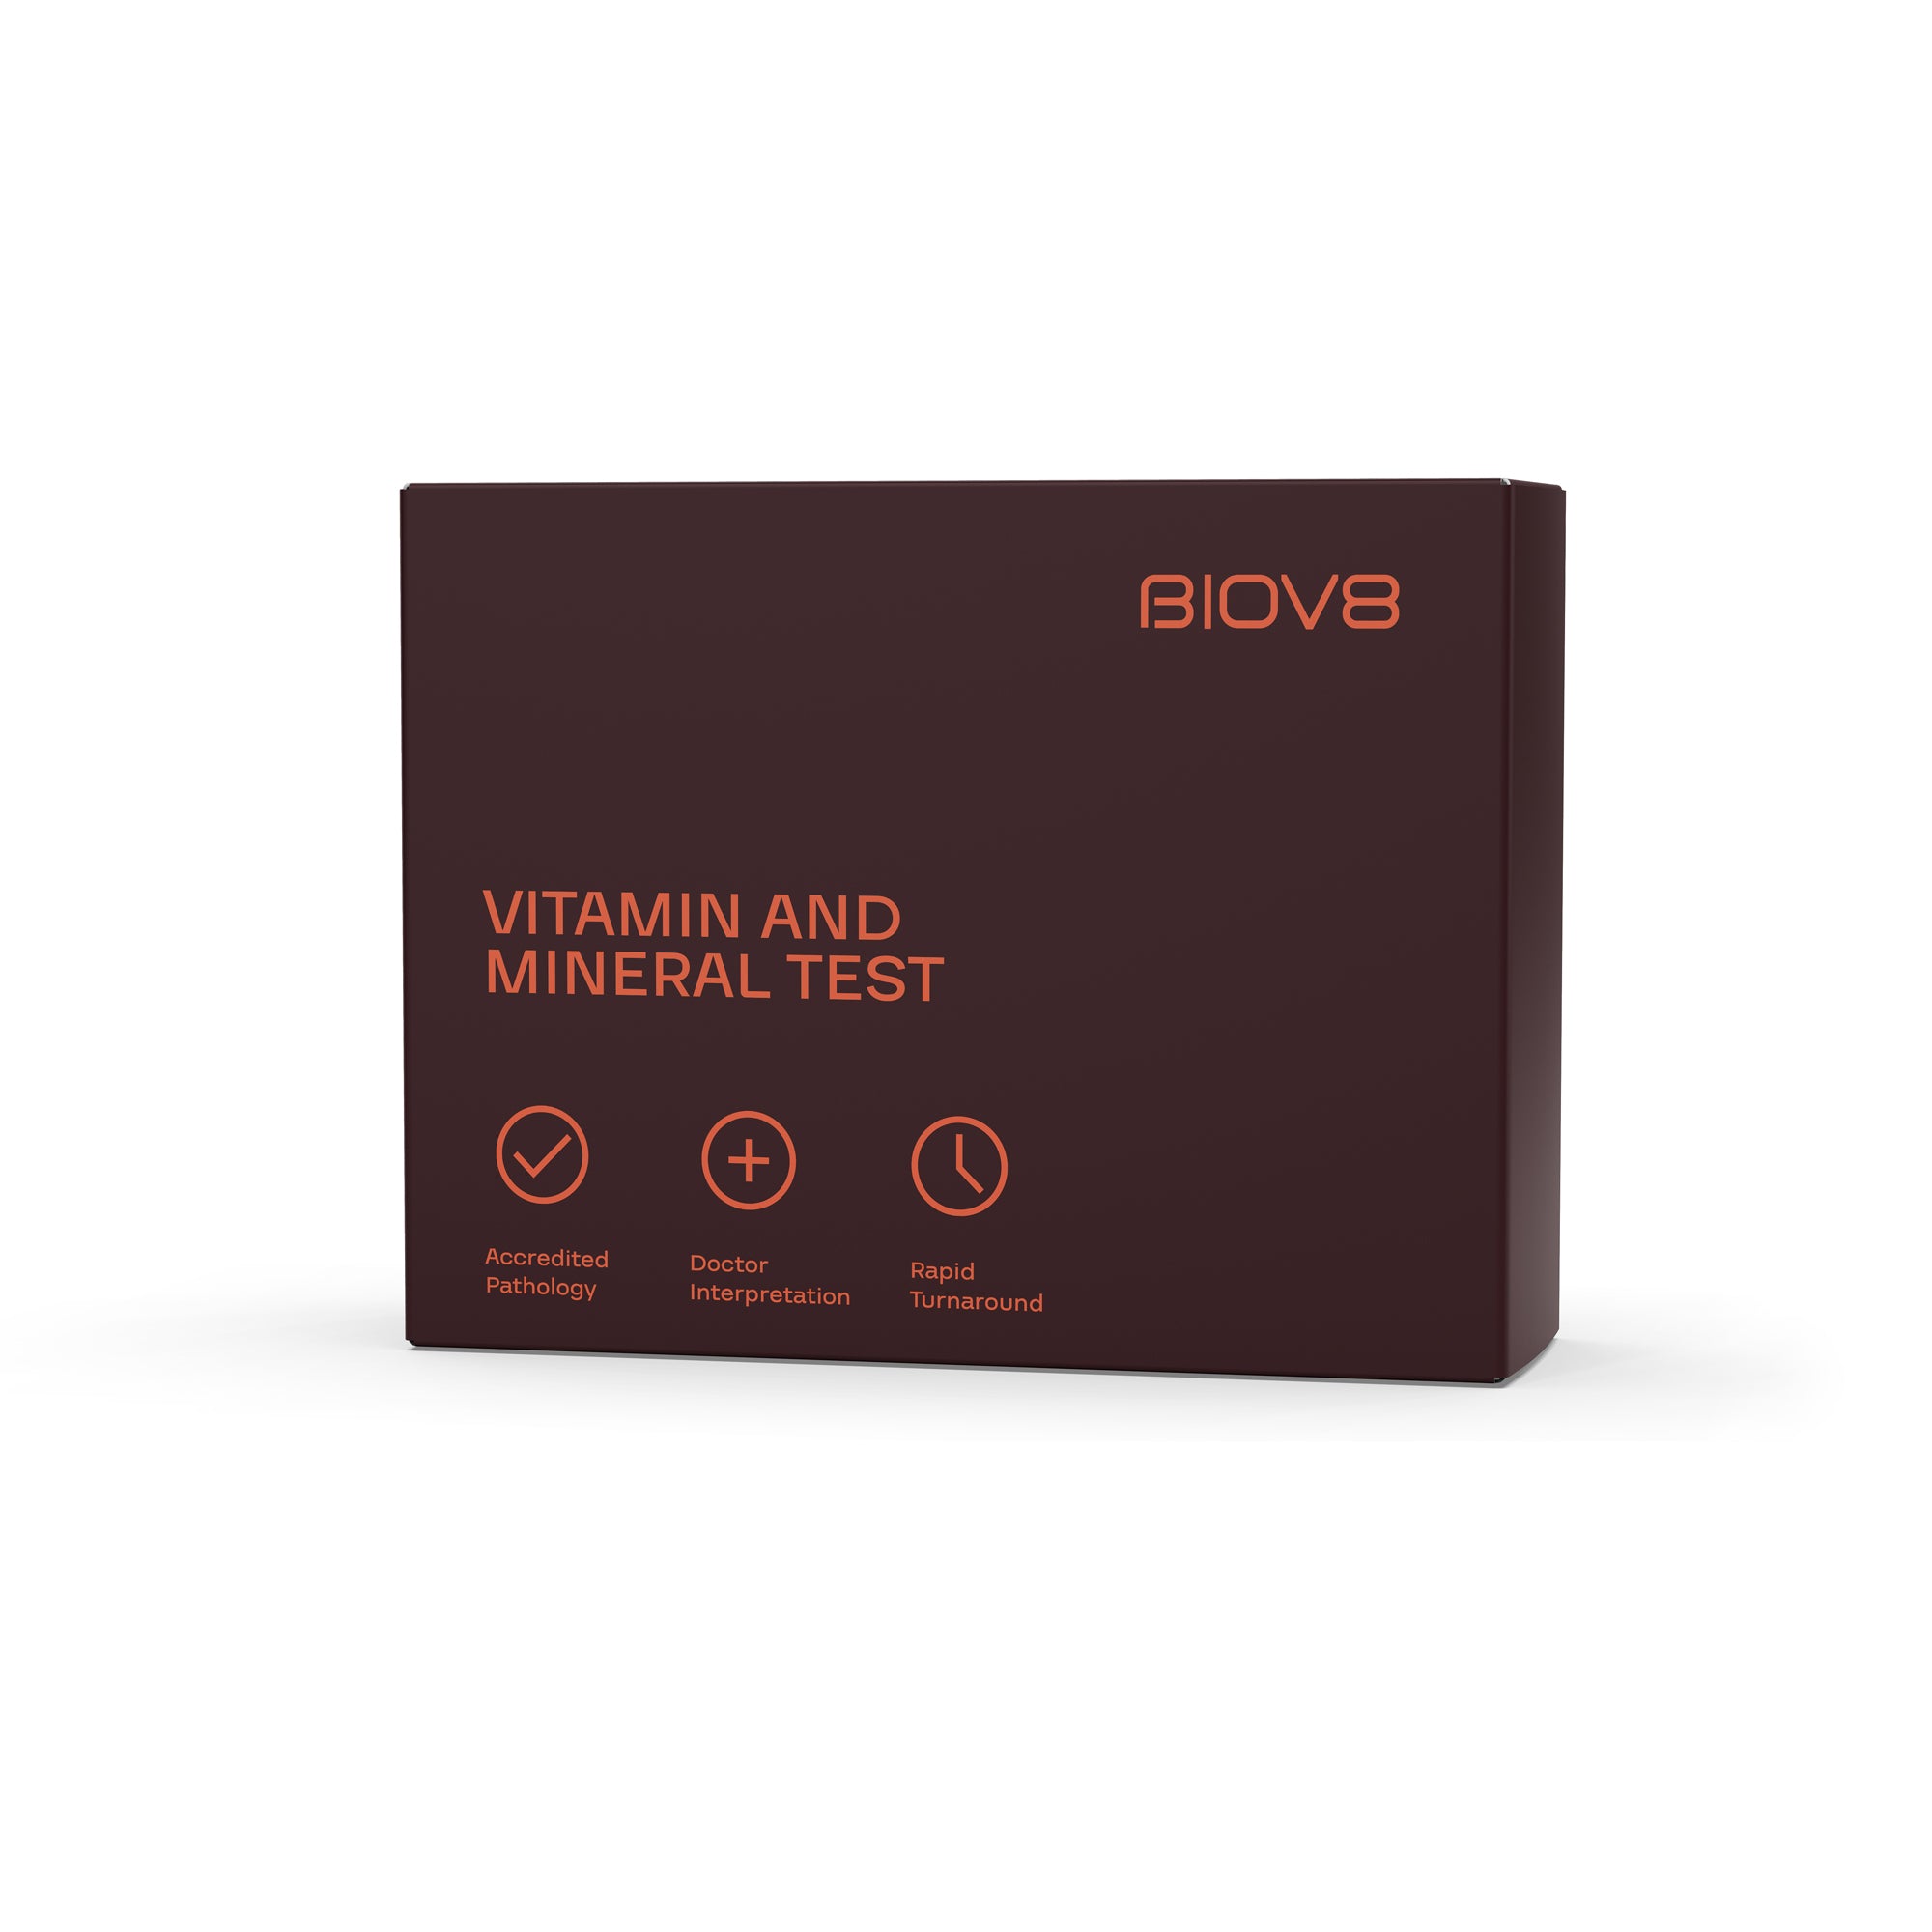 Biov8's Vitamin and Mineral blood work analysis kit